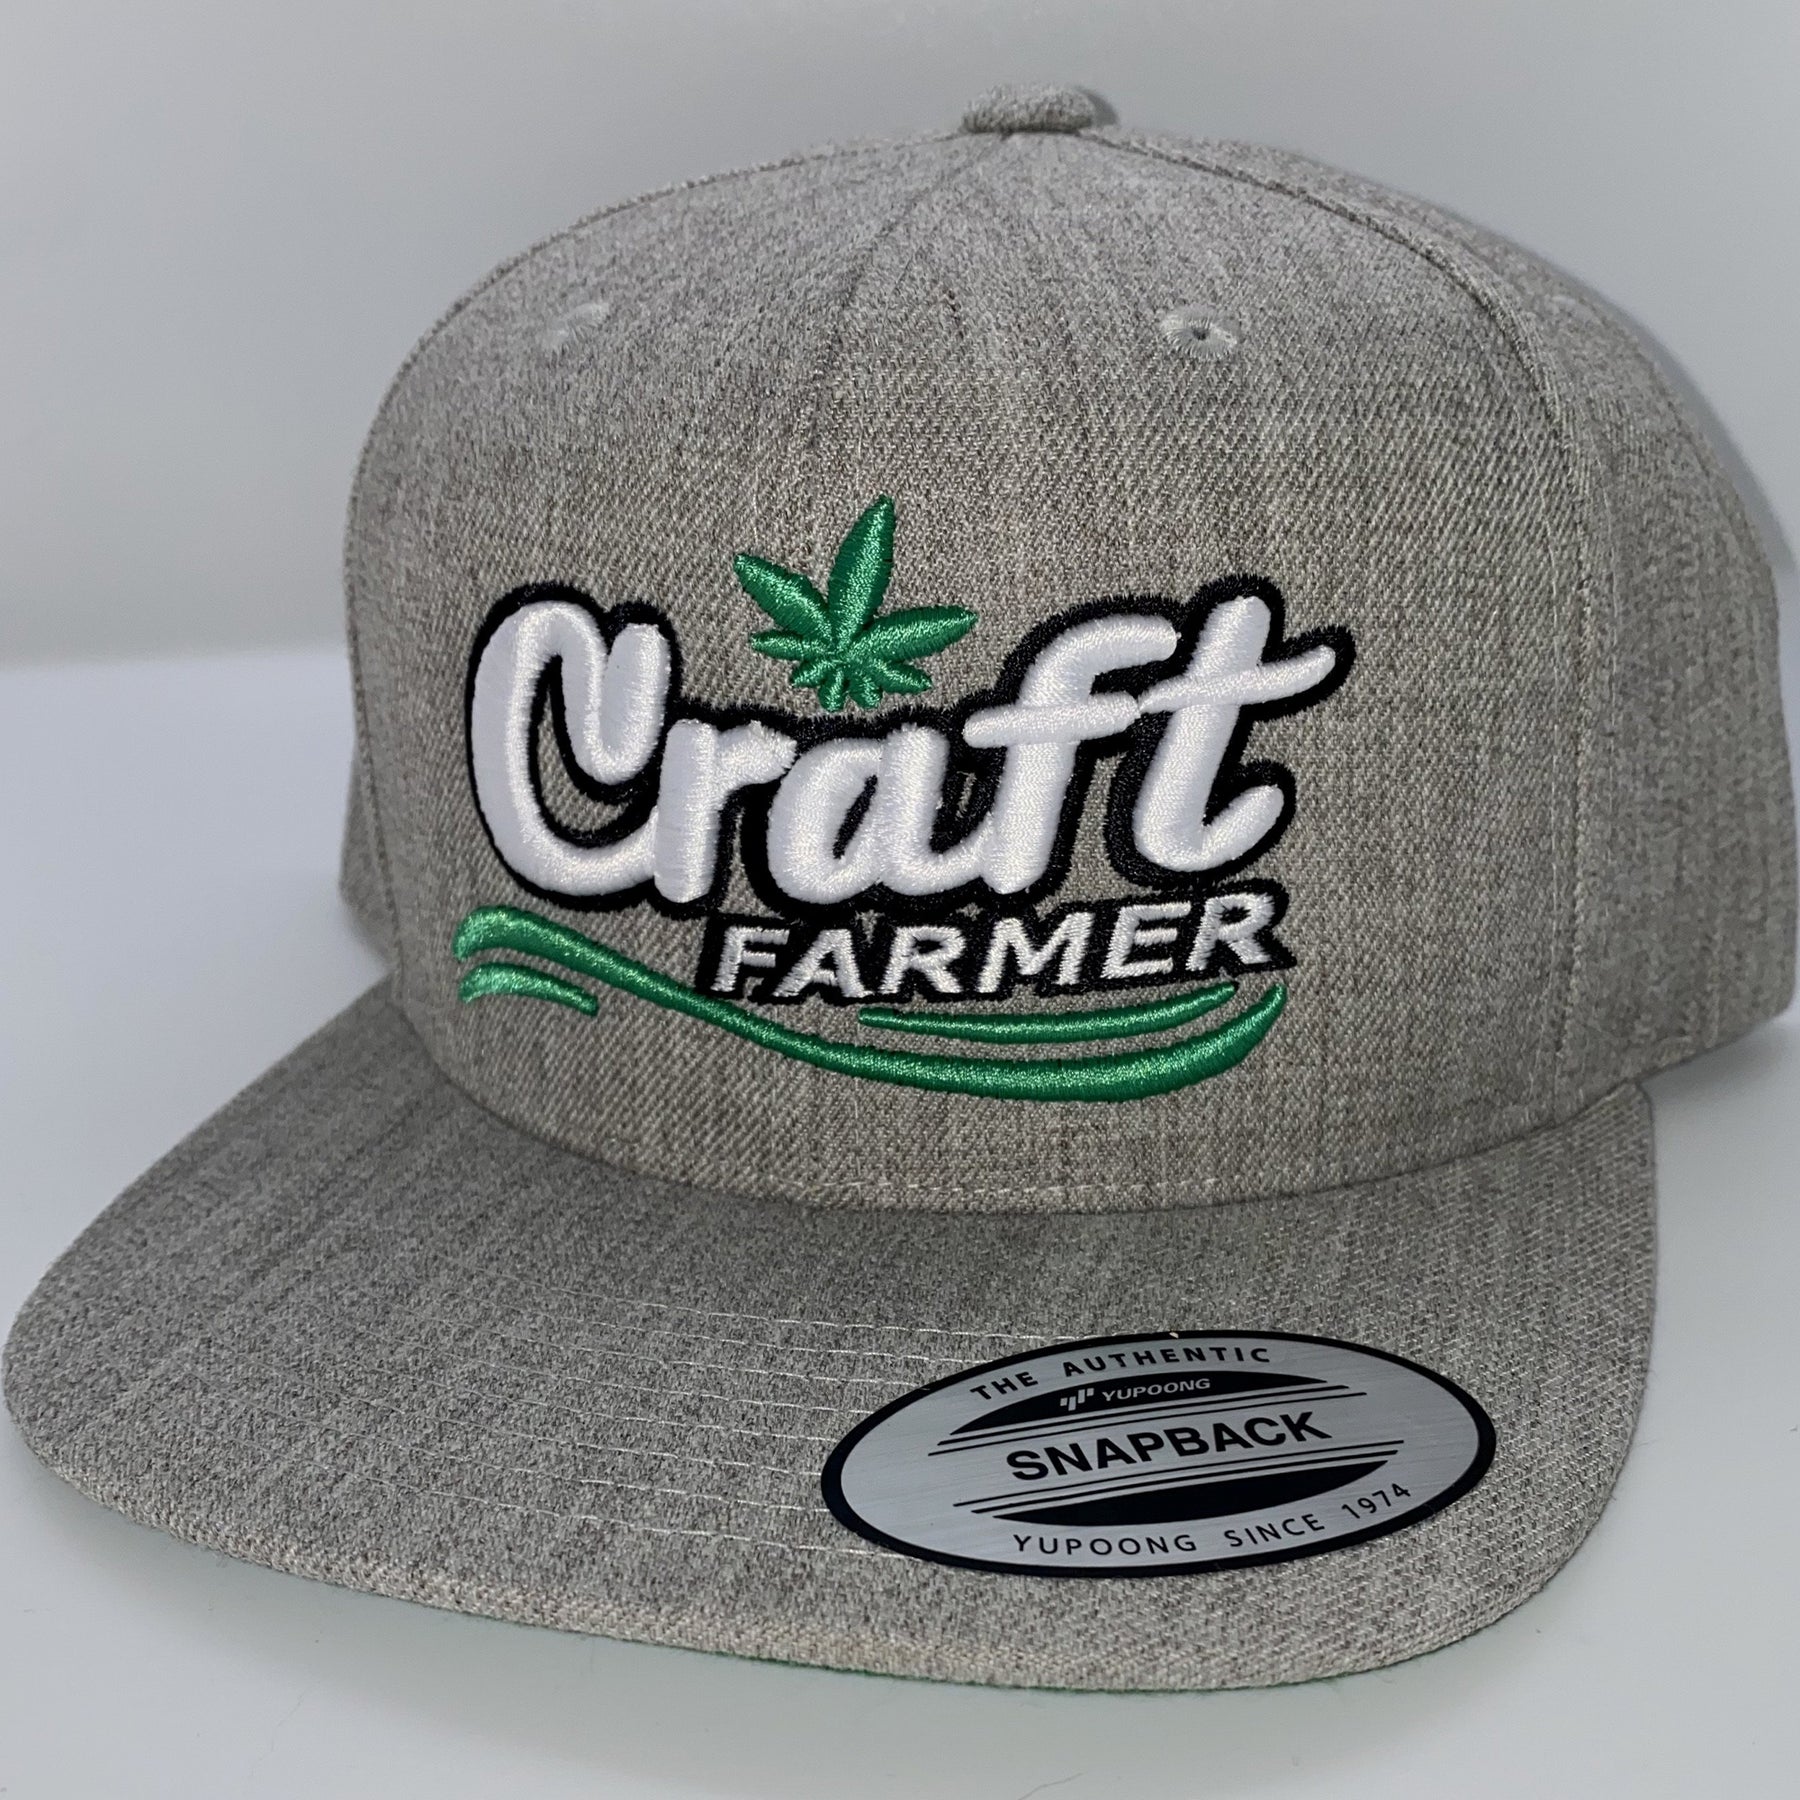 The OG Craft Farmer Grey Hat